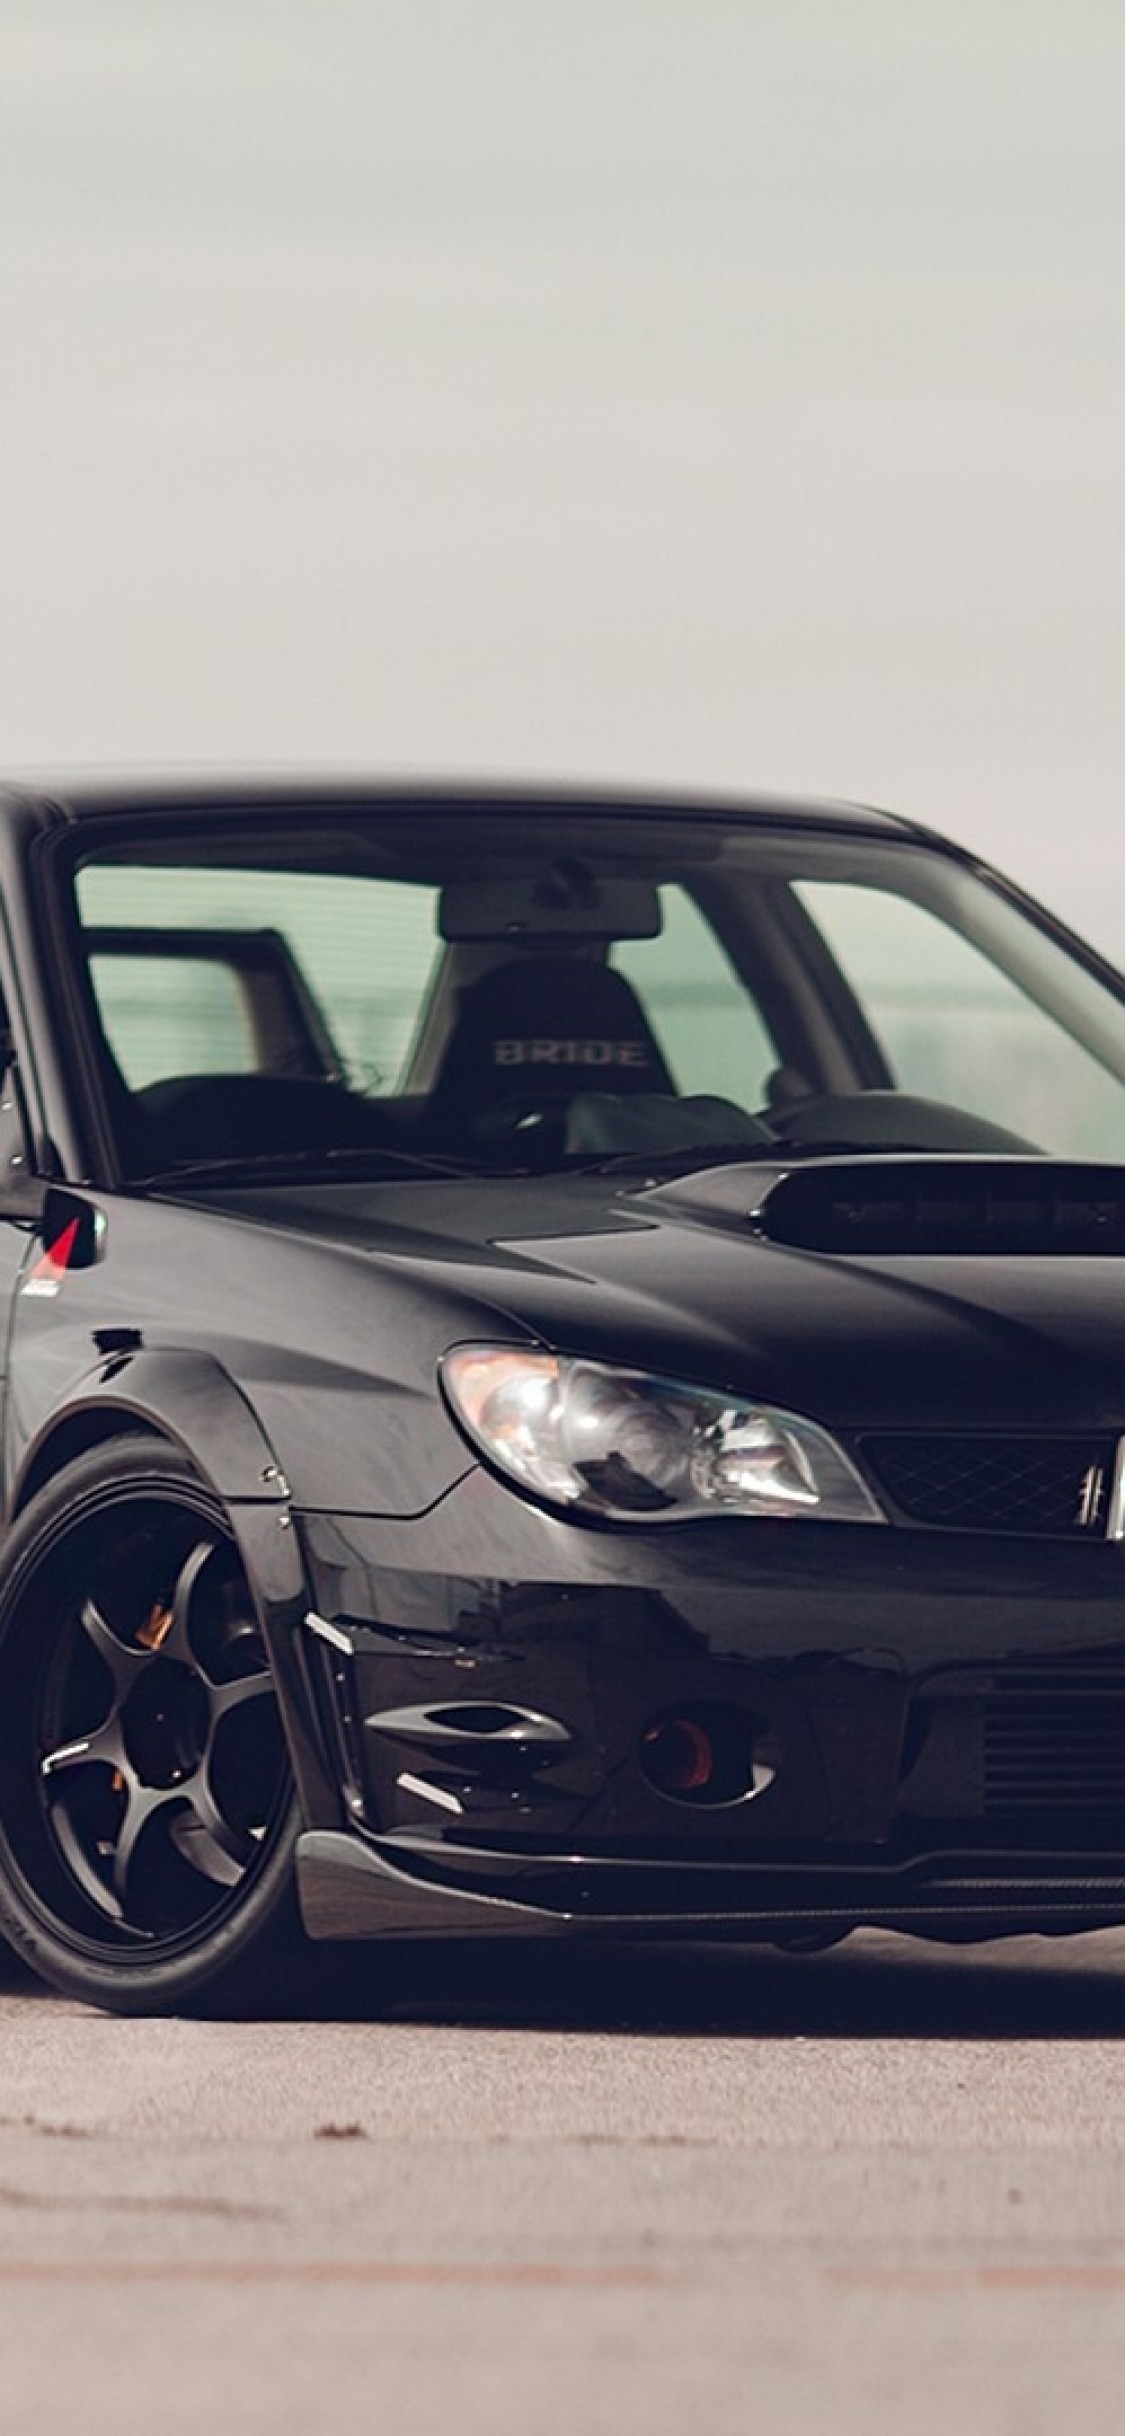 Subaru Impreza Wrx Sti, Black, Front View, Cars - Subaru Impreza Wrx Sti Black - HD Wallpaper 